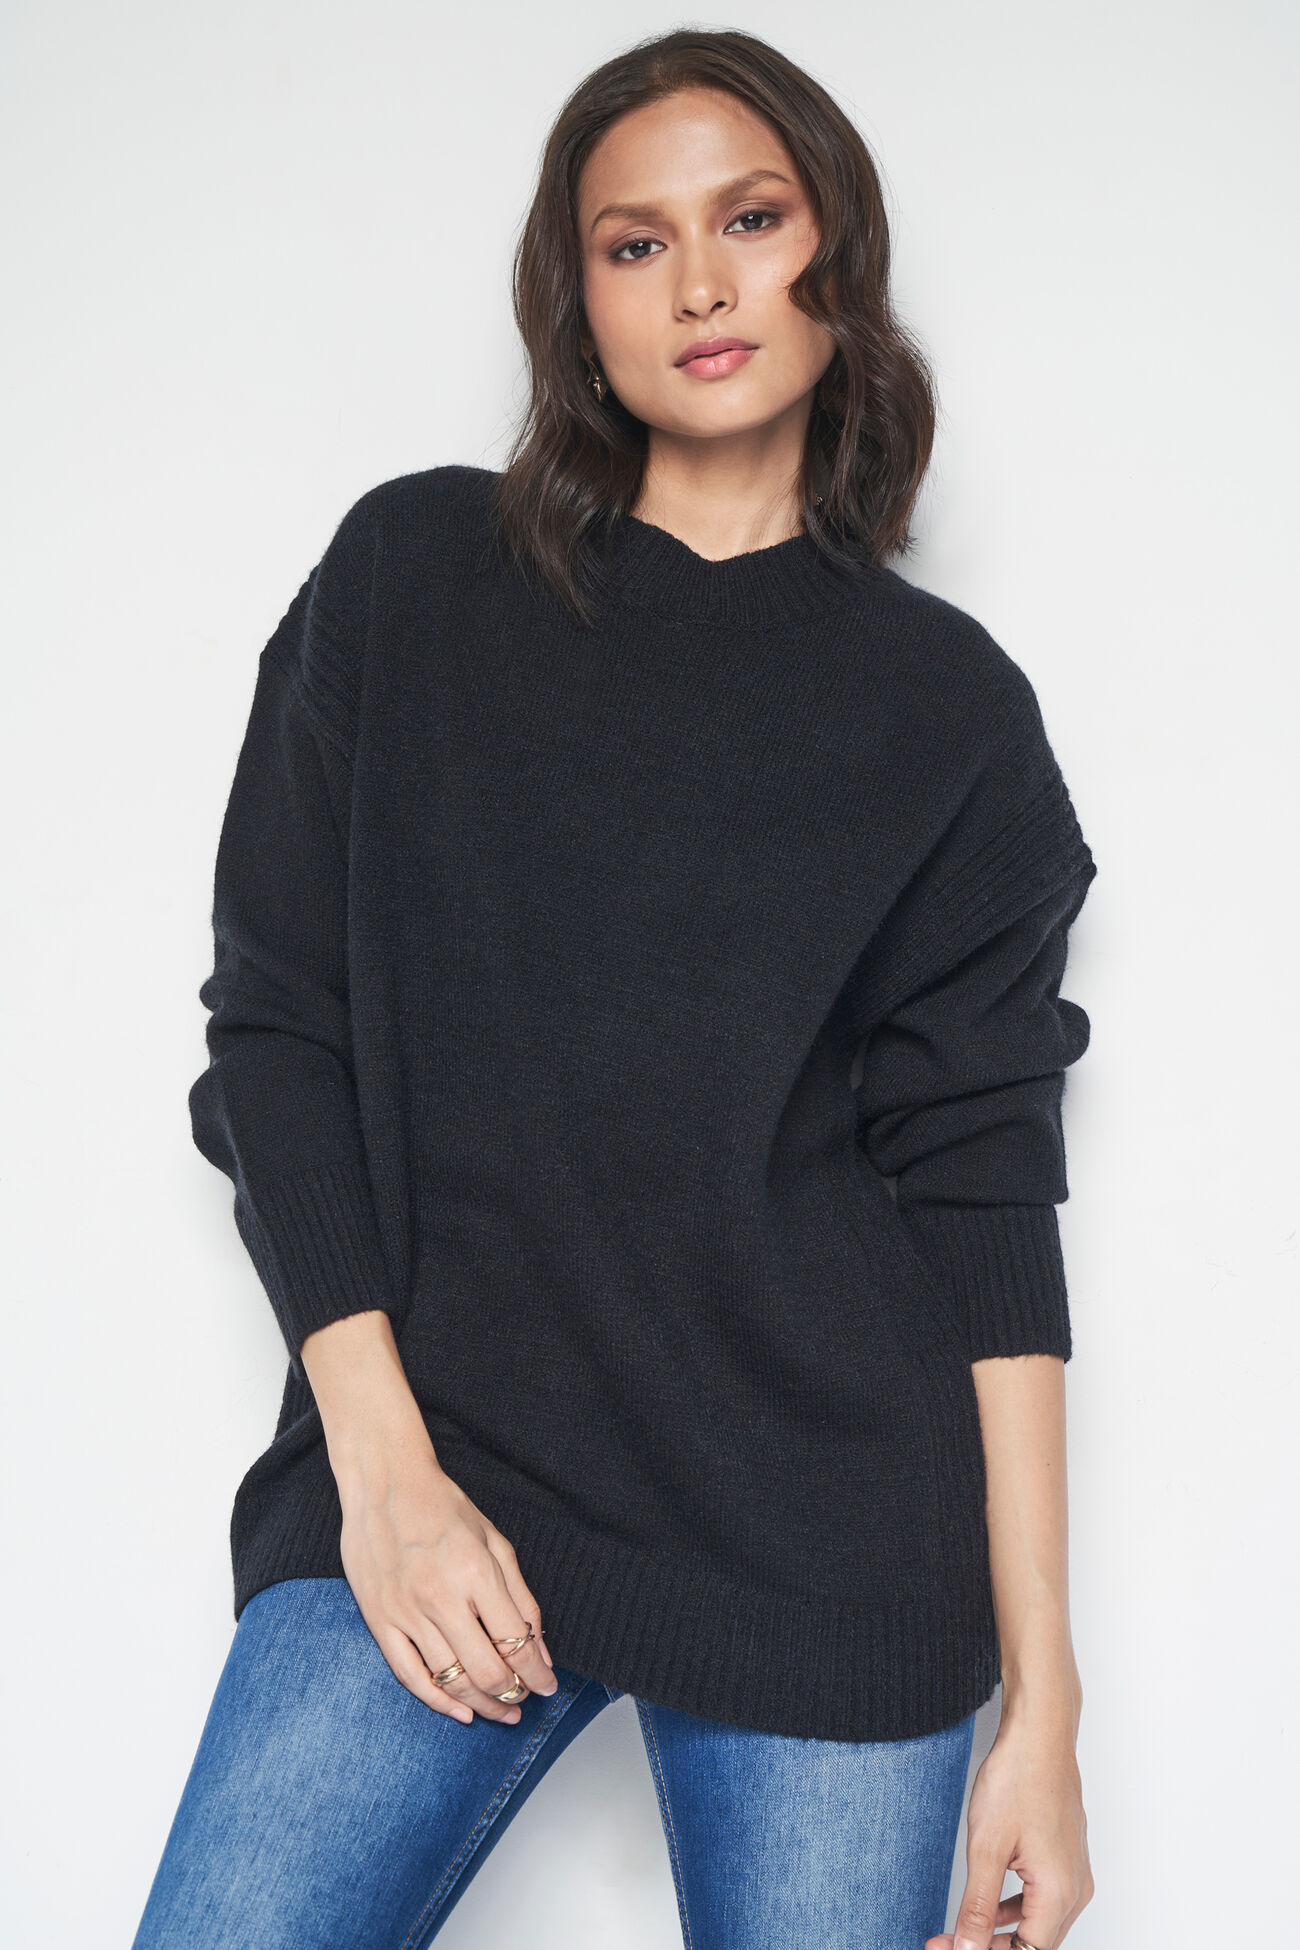 Aspen Over-Sized Sweater, Black, image 3